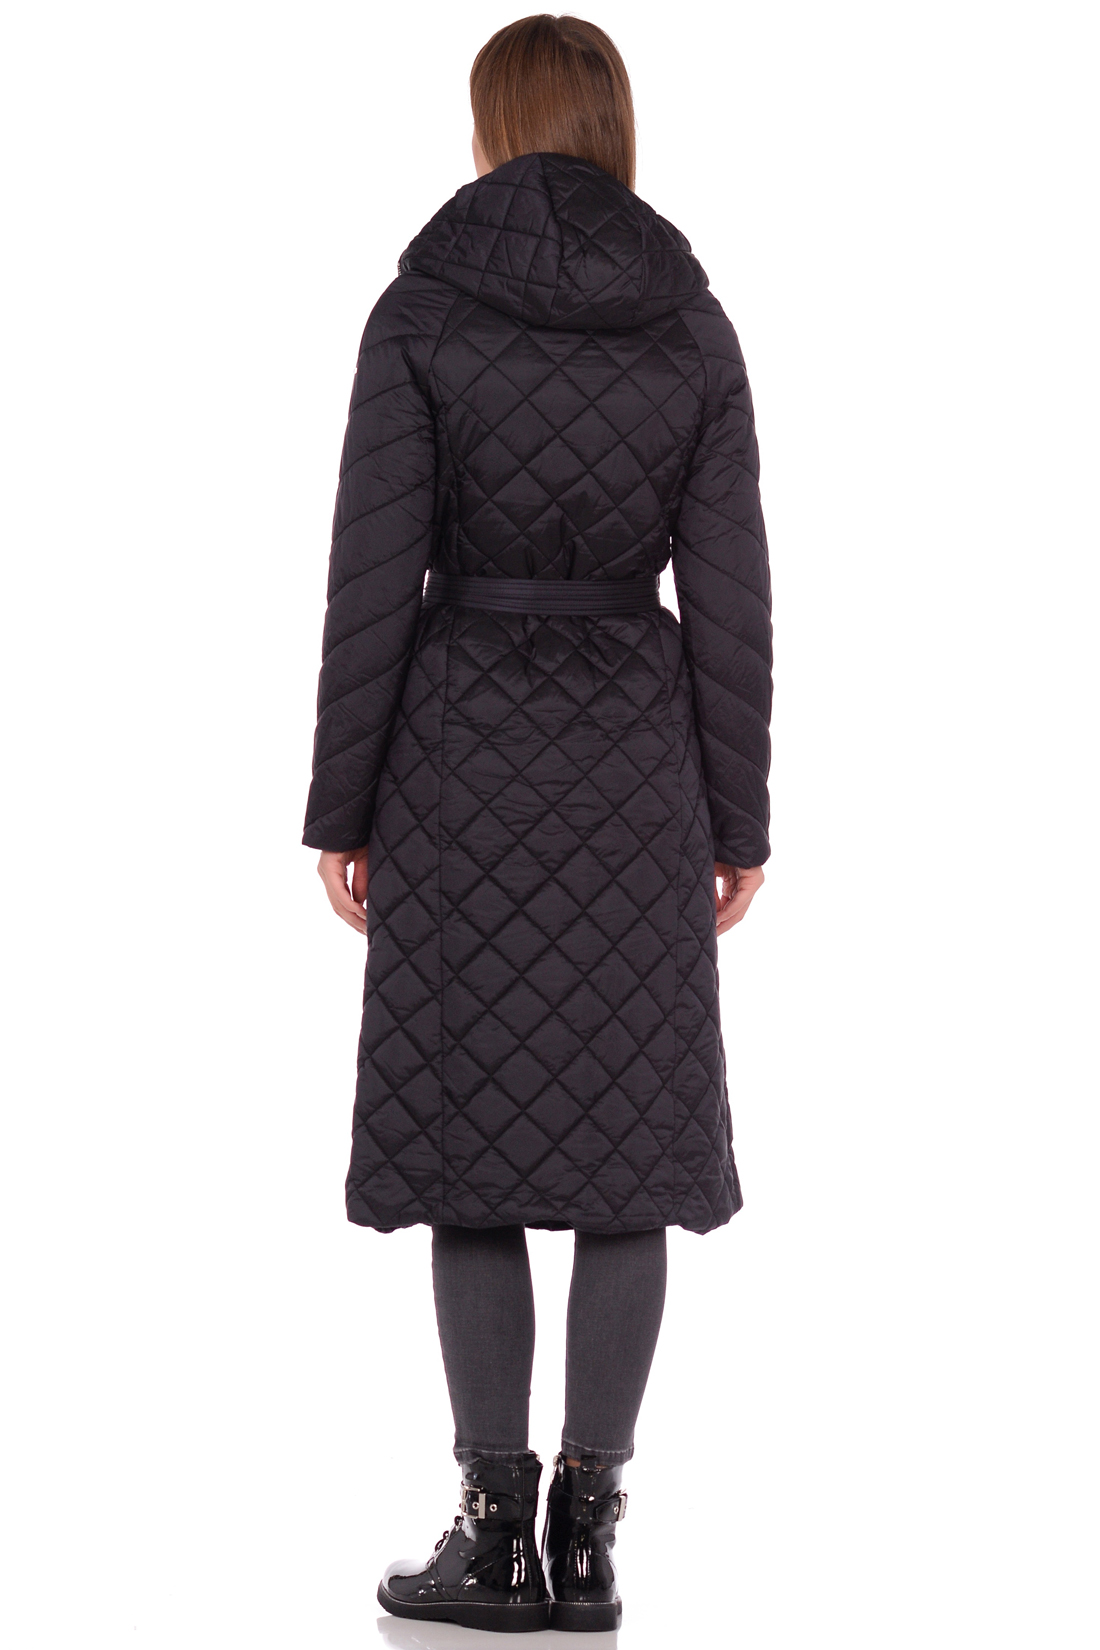 Длинная стёганая куртка (арт. baon B038547), размер L, цвет черный Длинная стёганая куртка (арт. baon B038547) - фото 2